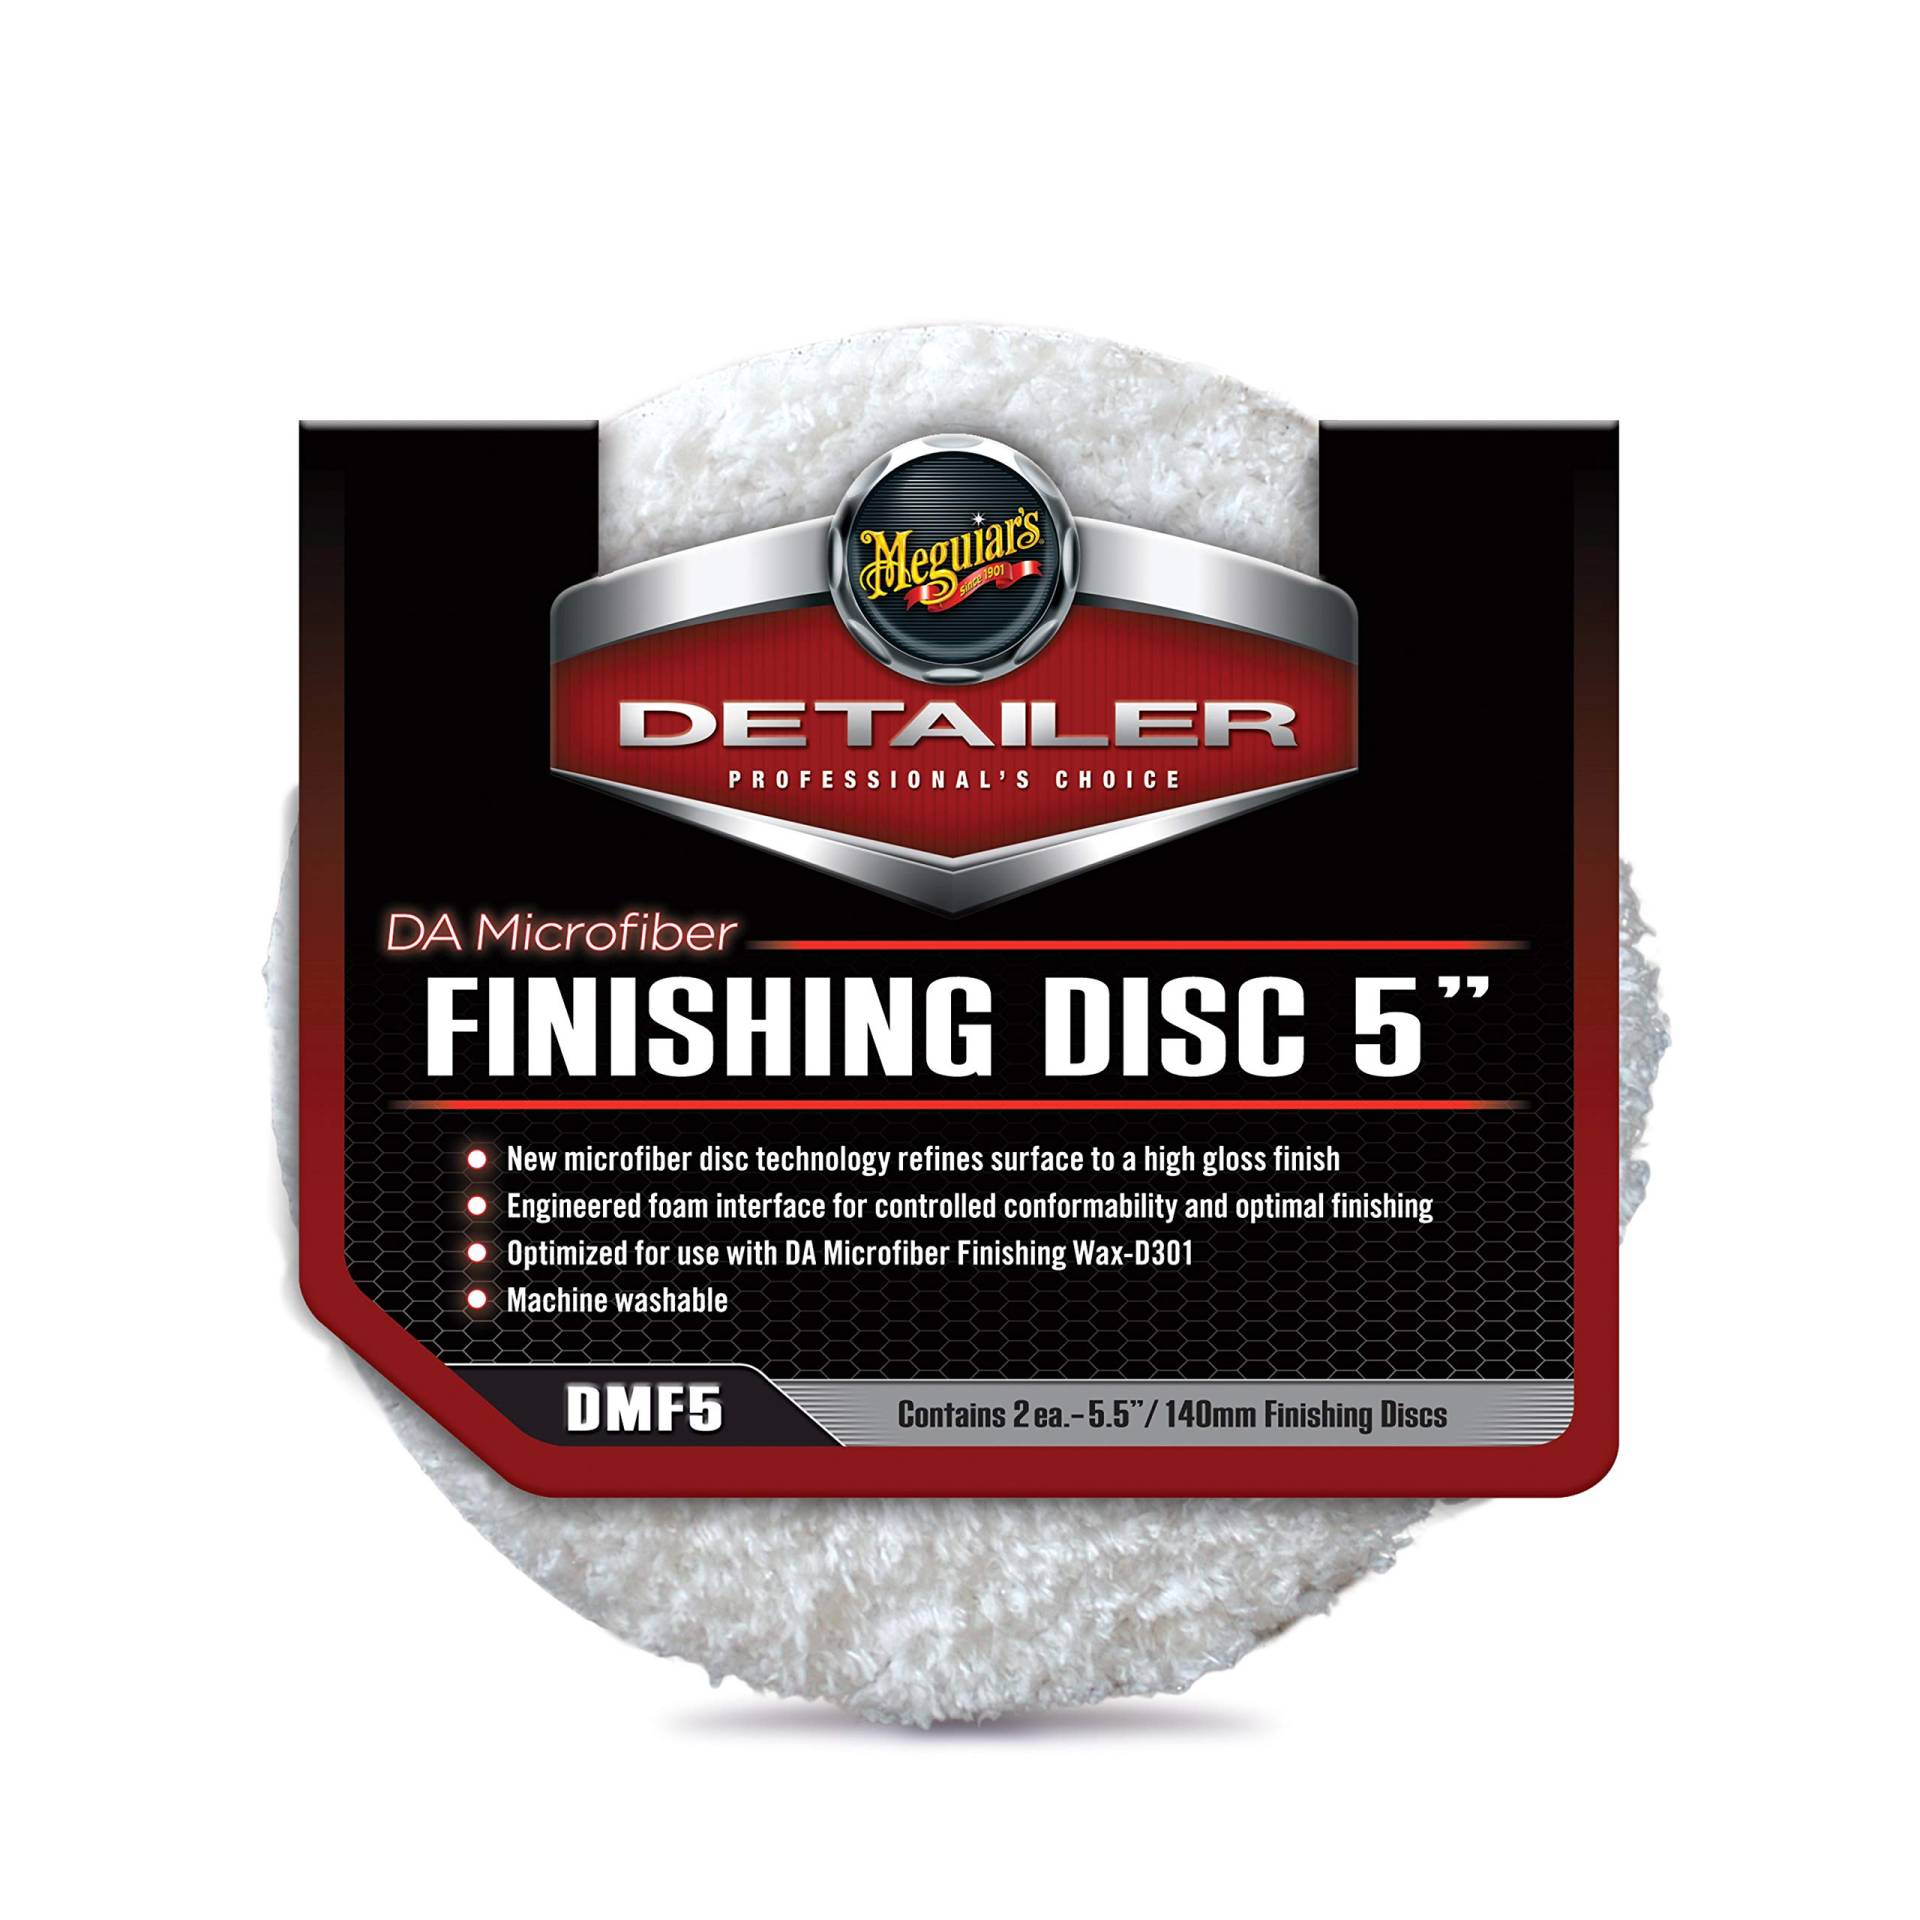 Meguiar's DMF5 DA Microfiber Finishing Disc 5" 140mm Mikrofaseraufsatz (2er Pack) von Meguiar's